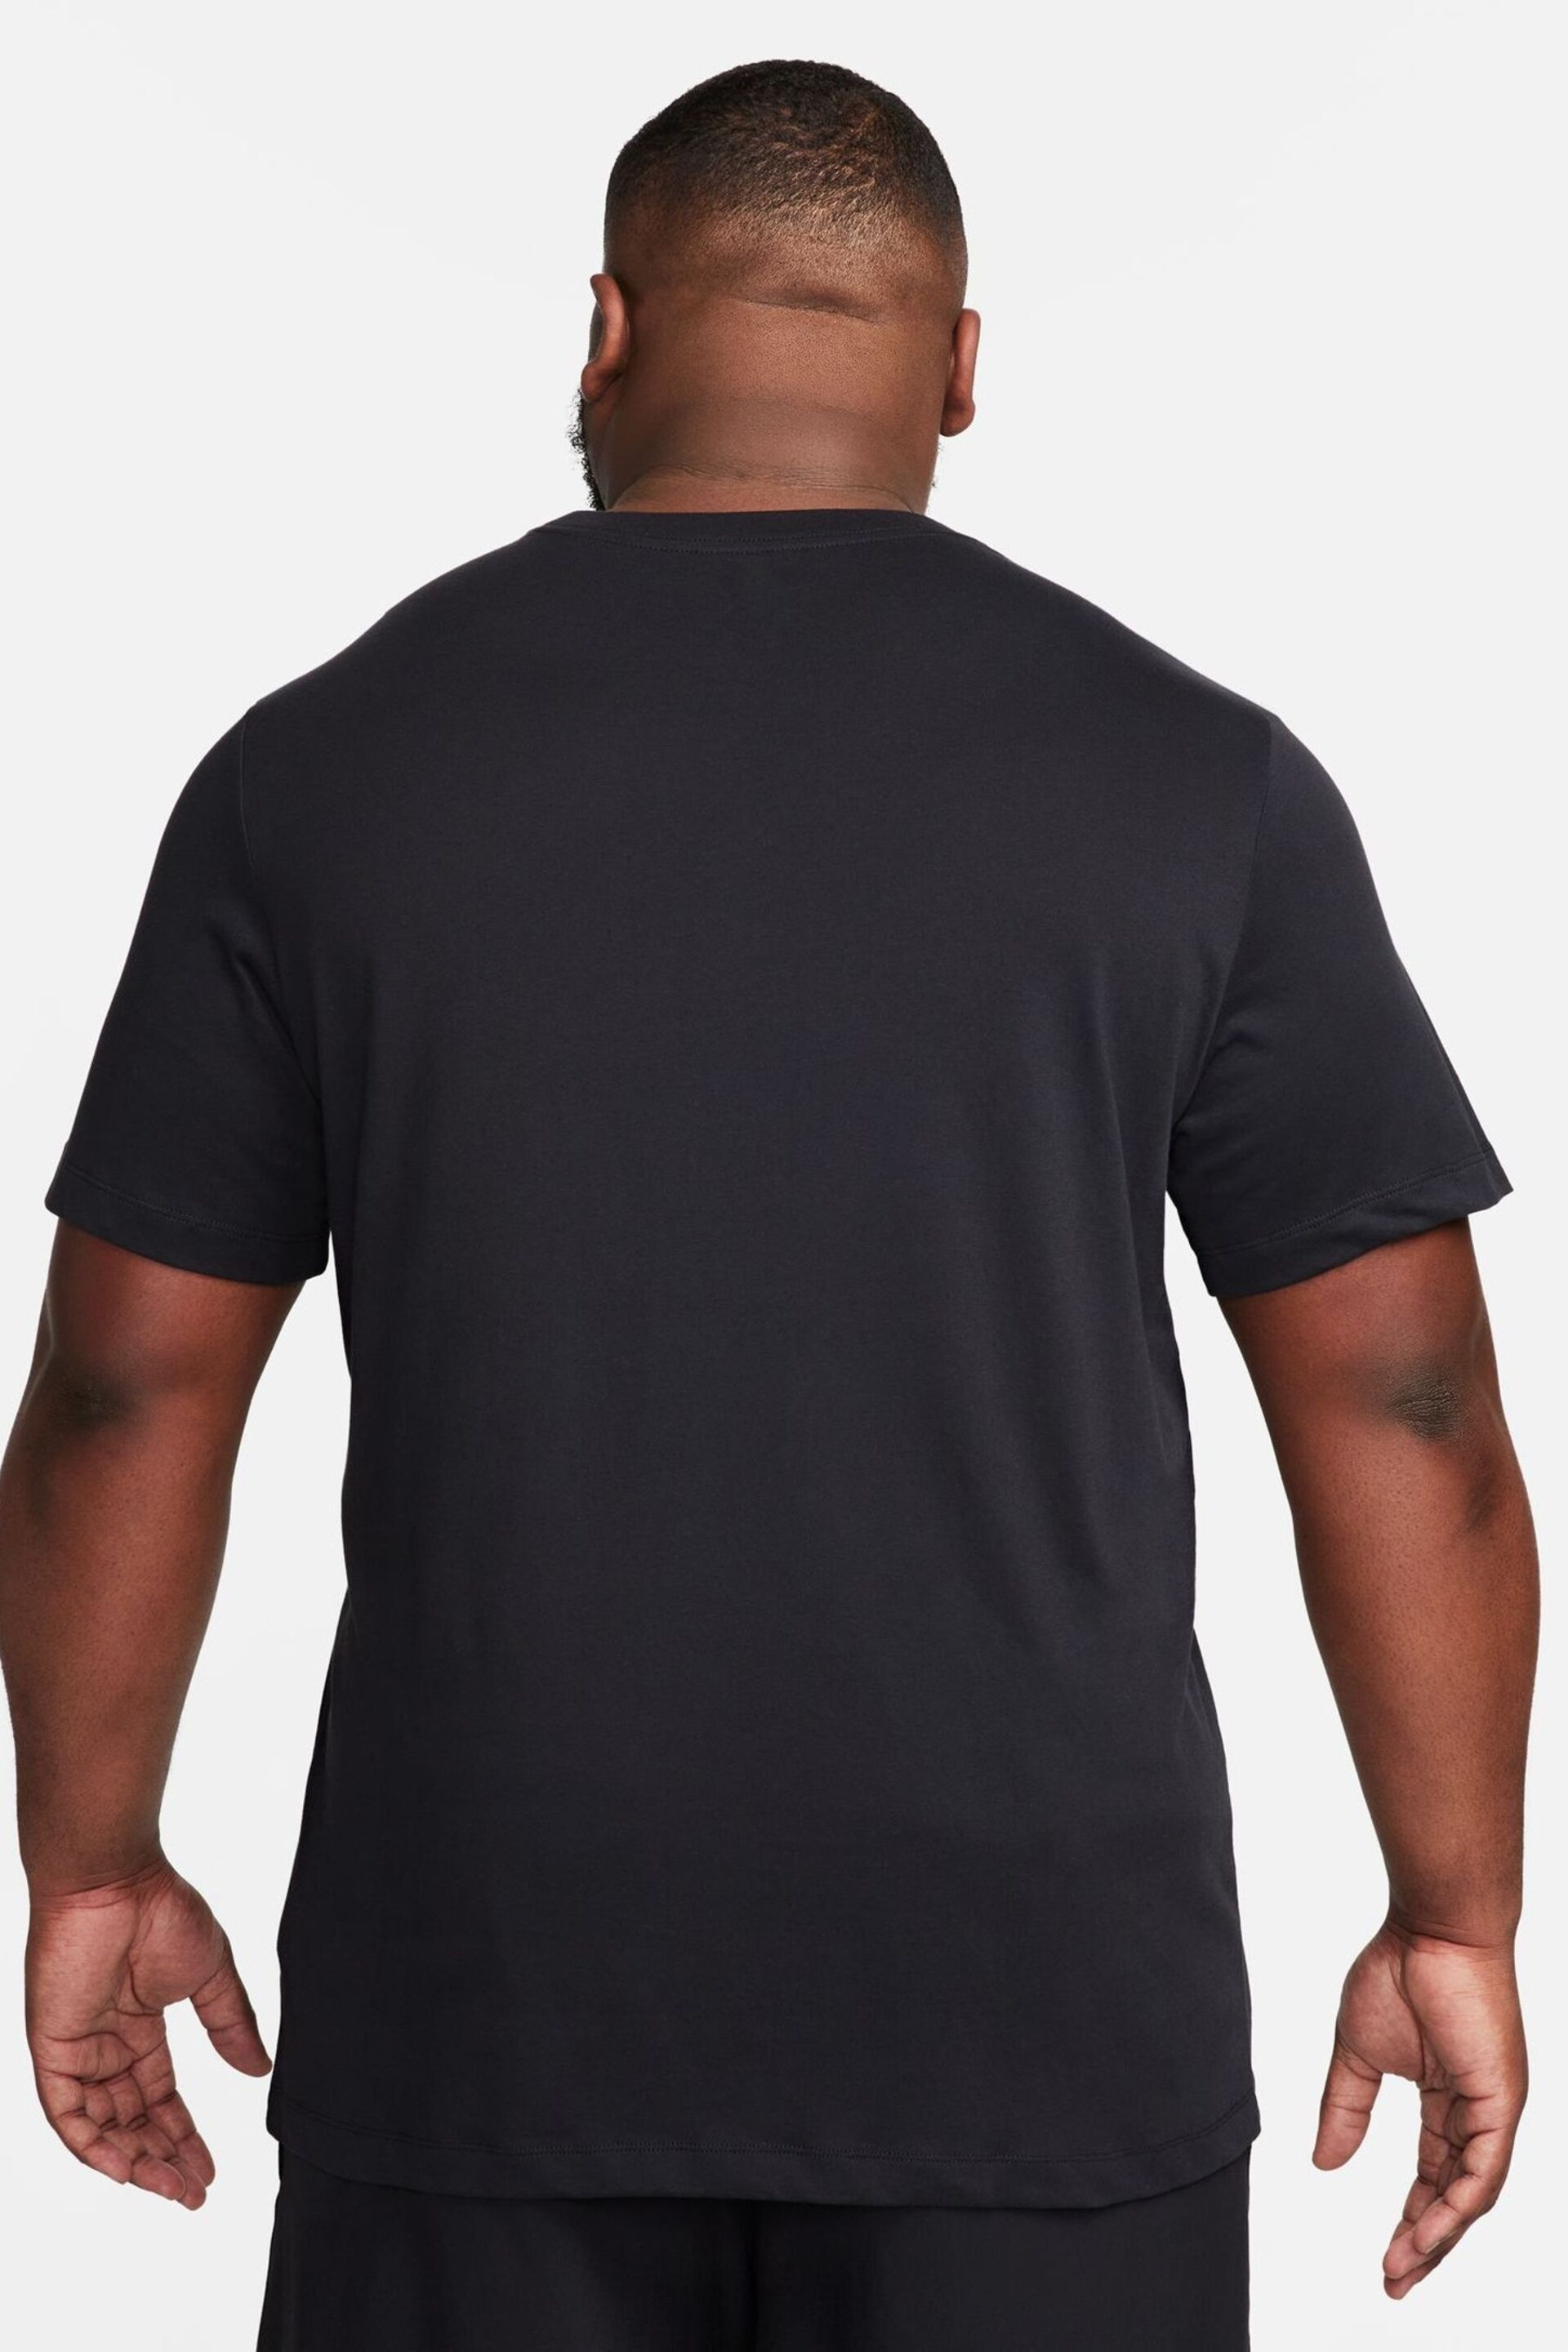 Nike Black Dri-FIT Training T-Shirt - Image 2 of 4